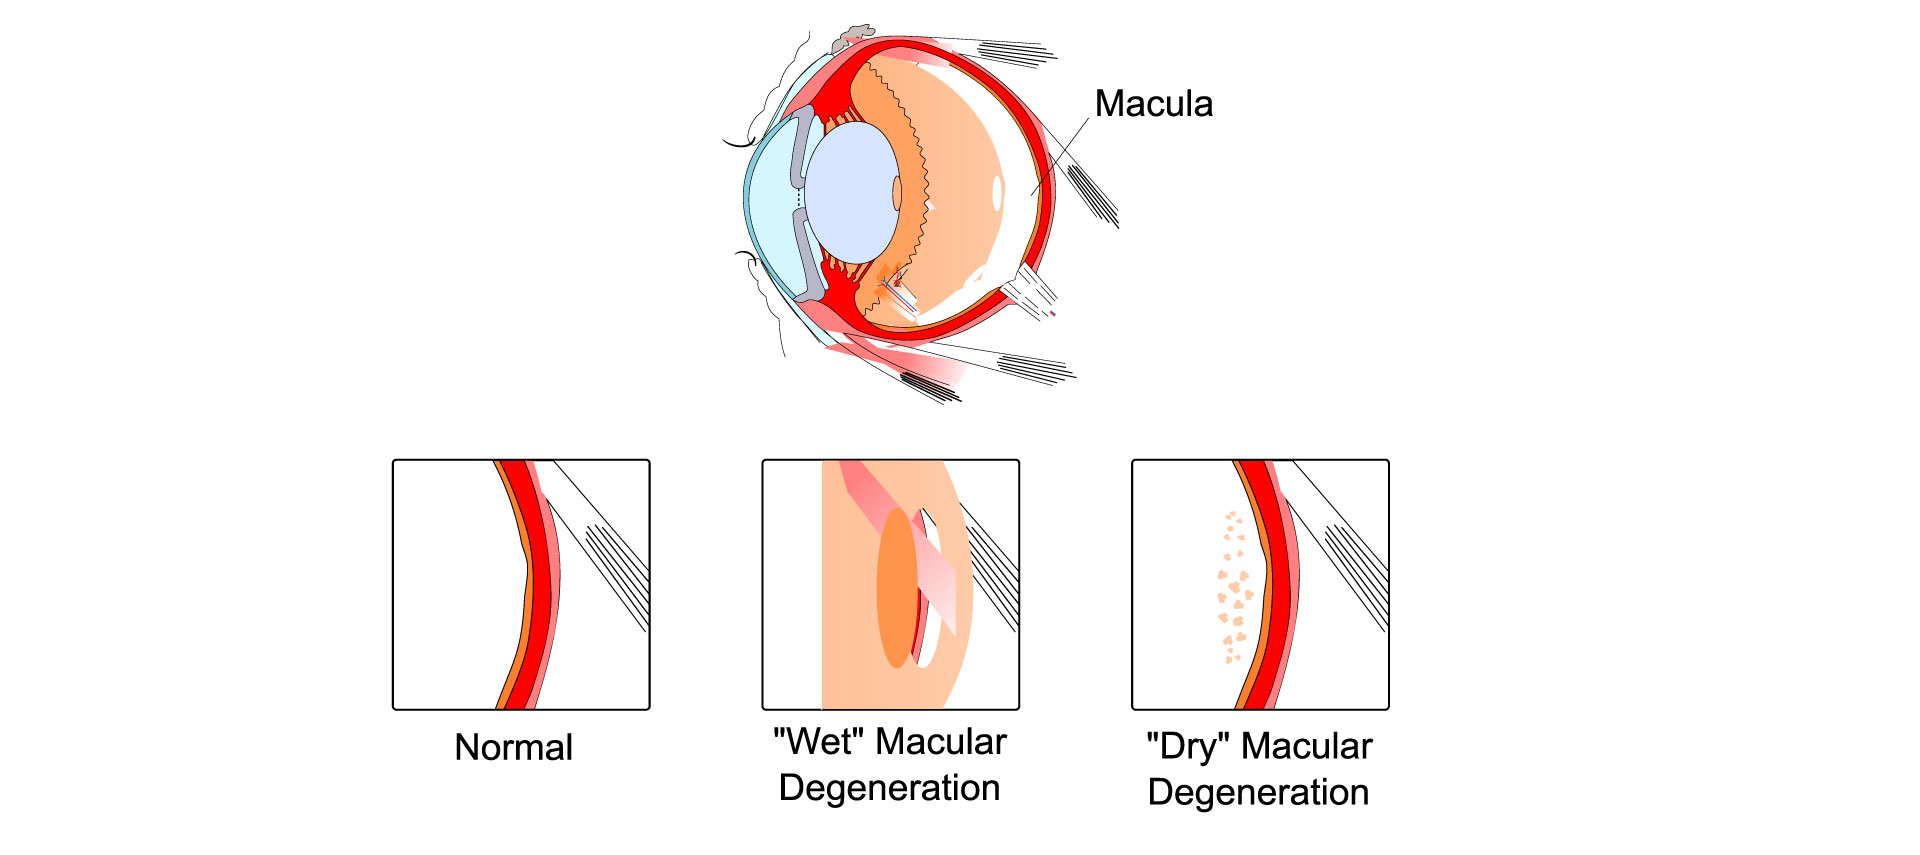 Age-related macular degeneration